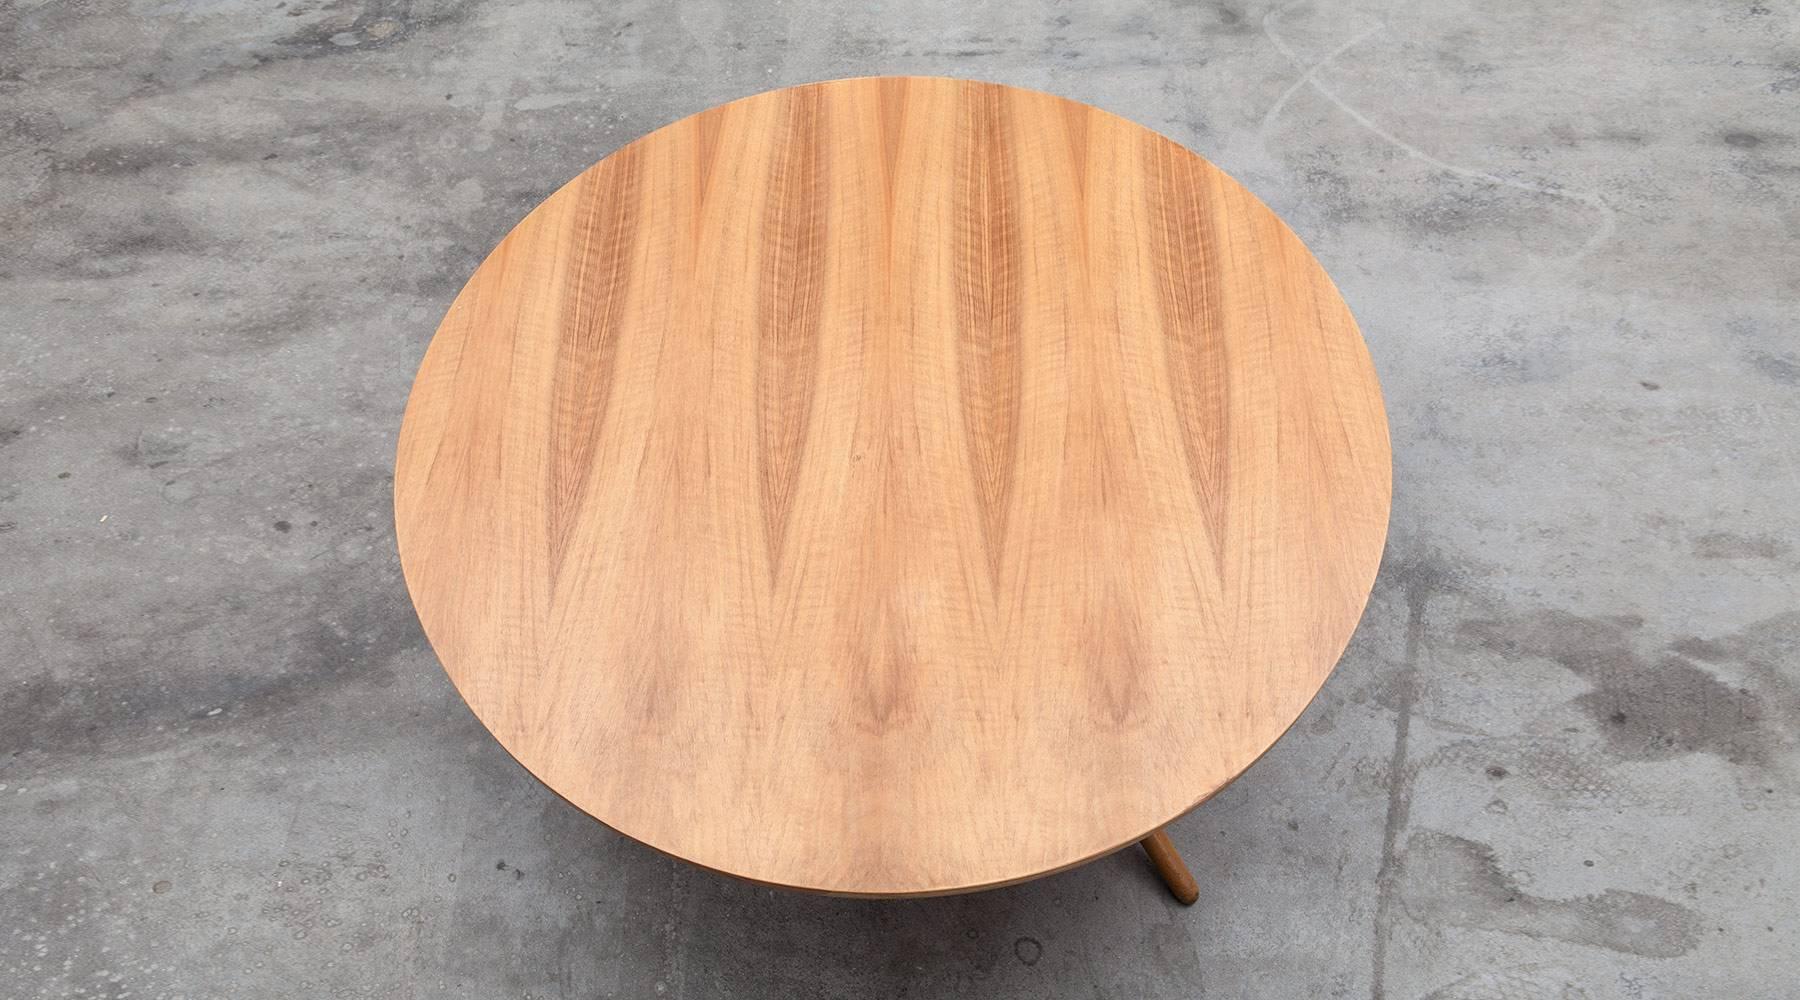 Mid-Century Modern Eat and Tea Table Designed by Jürg Bally 'i'